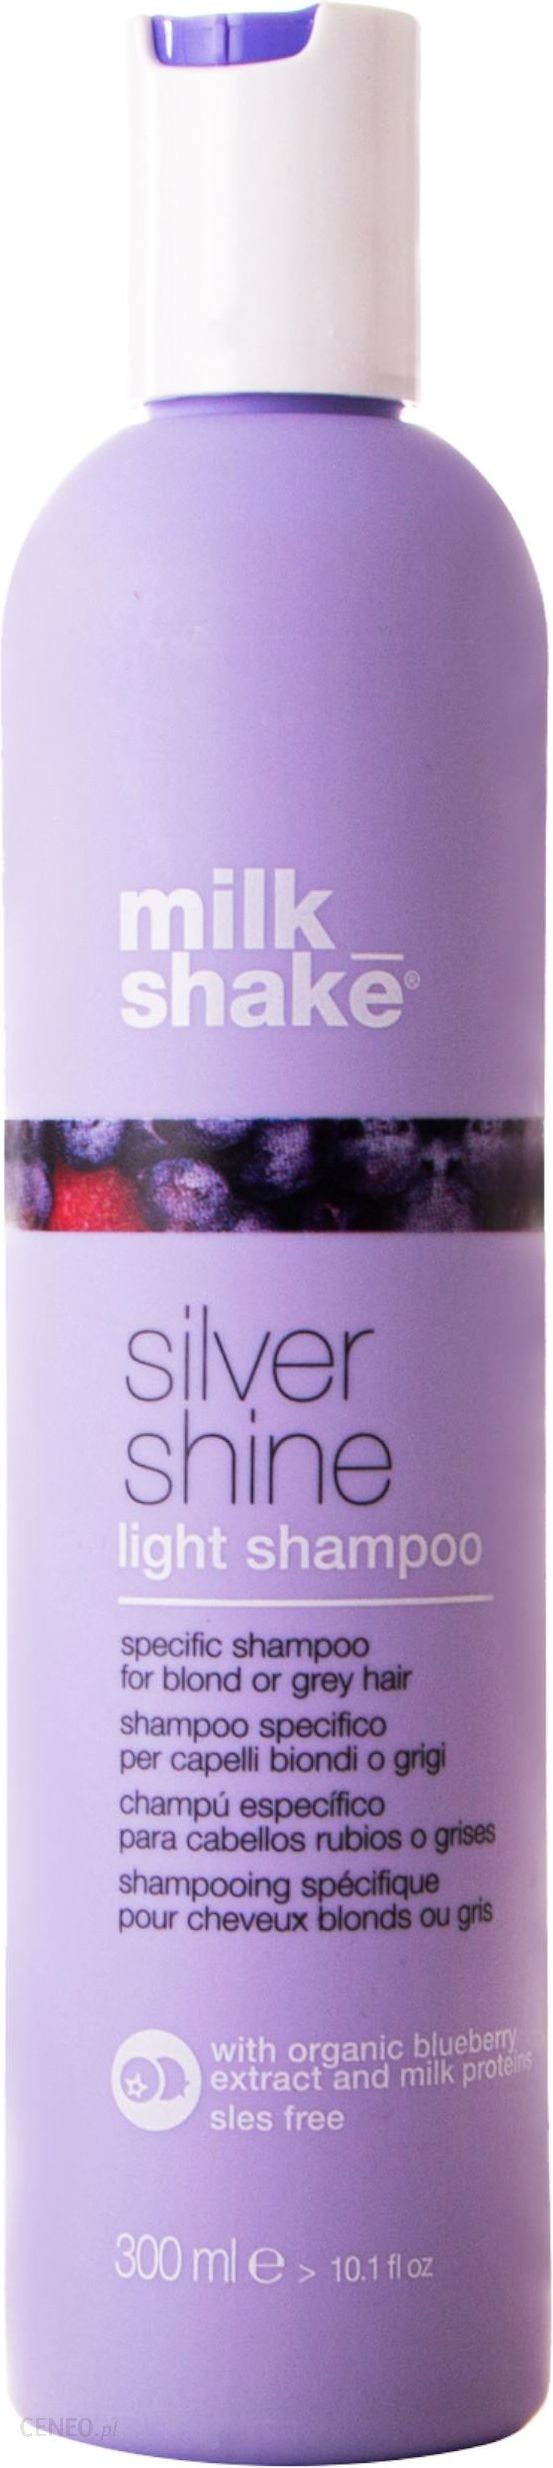 milk shake silver shine szampon ceneo